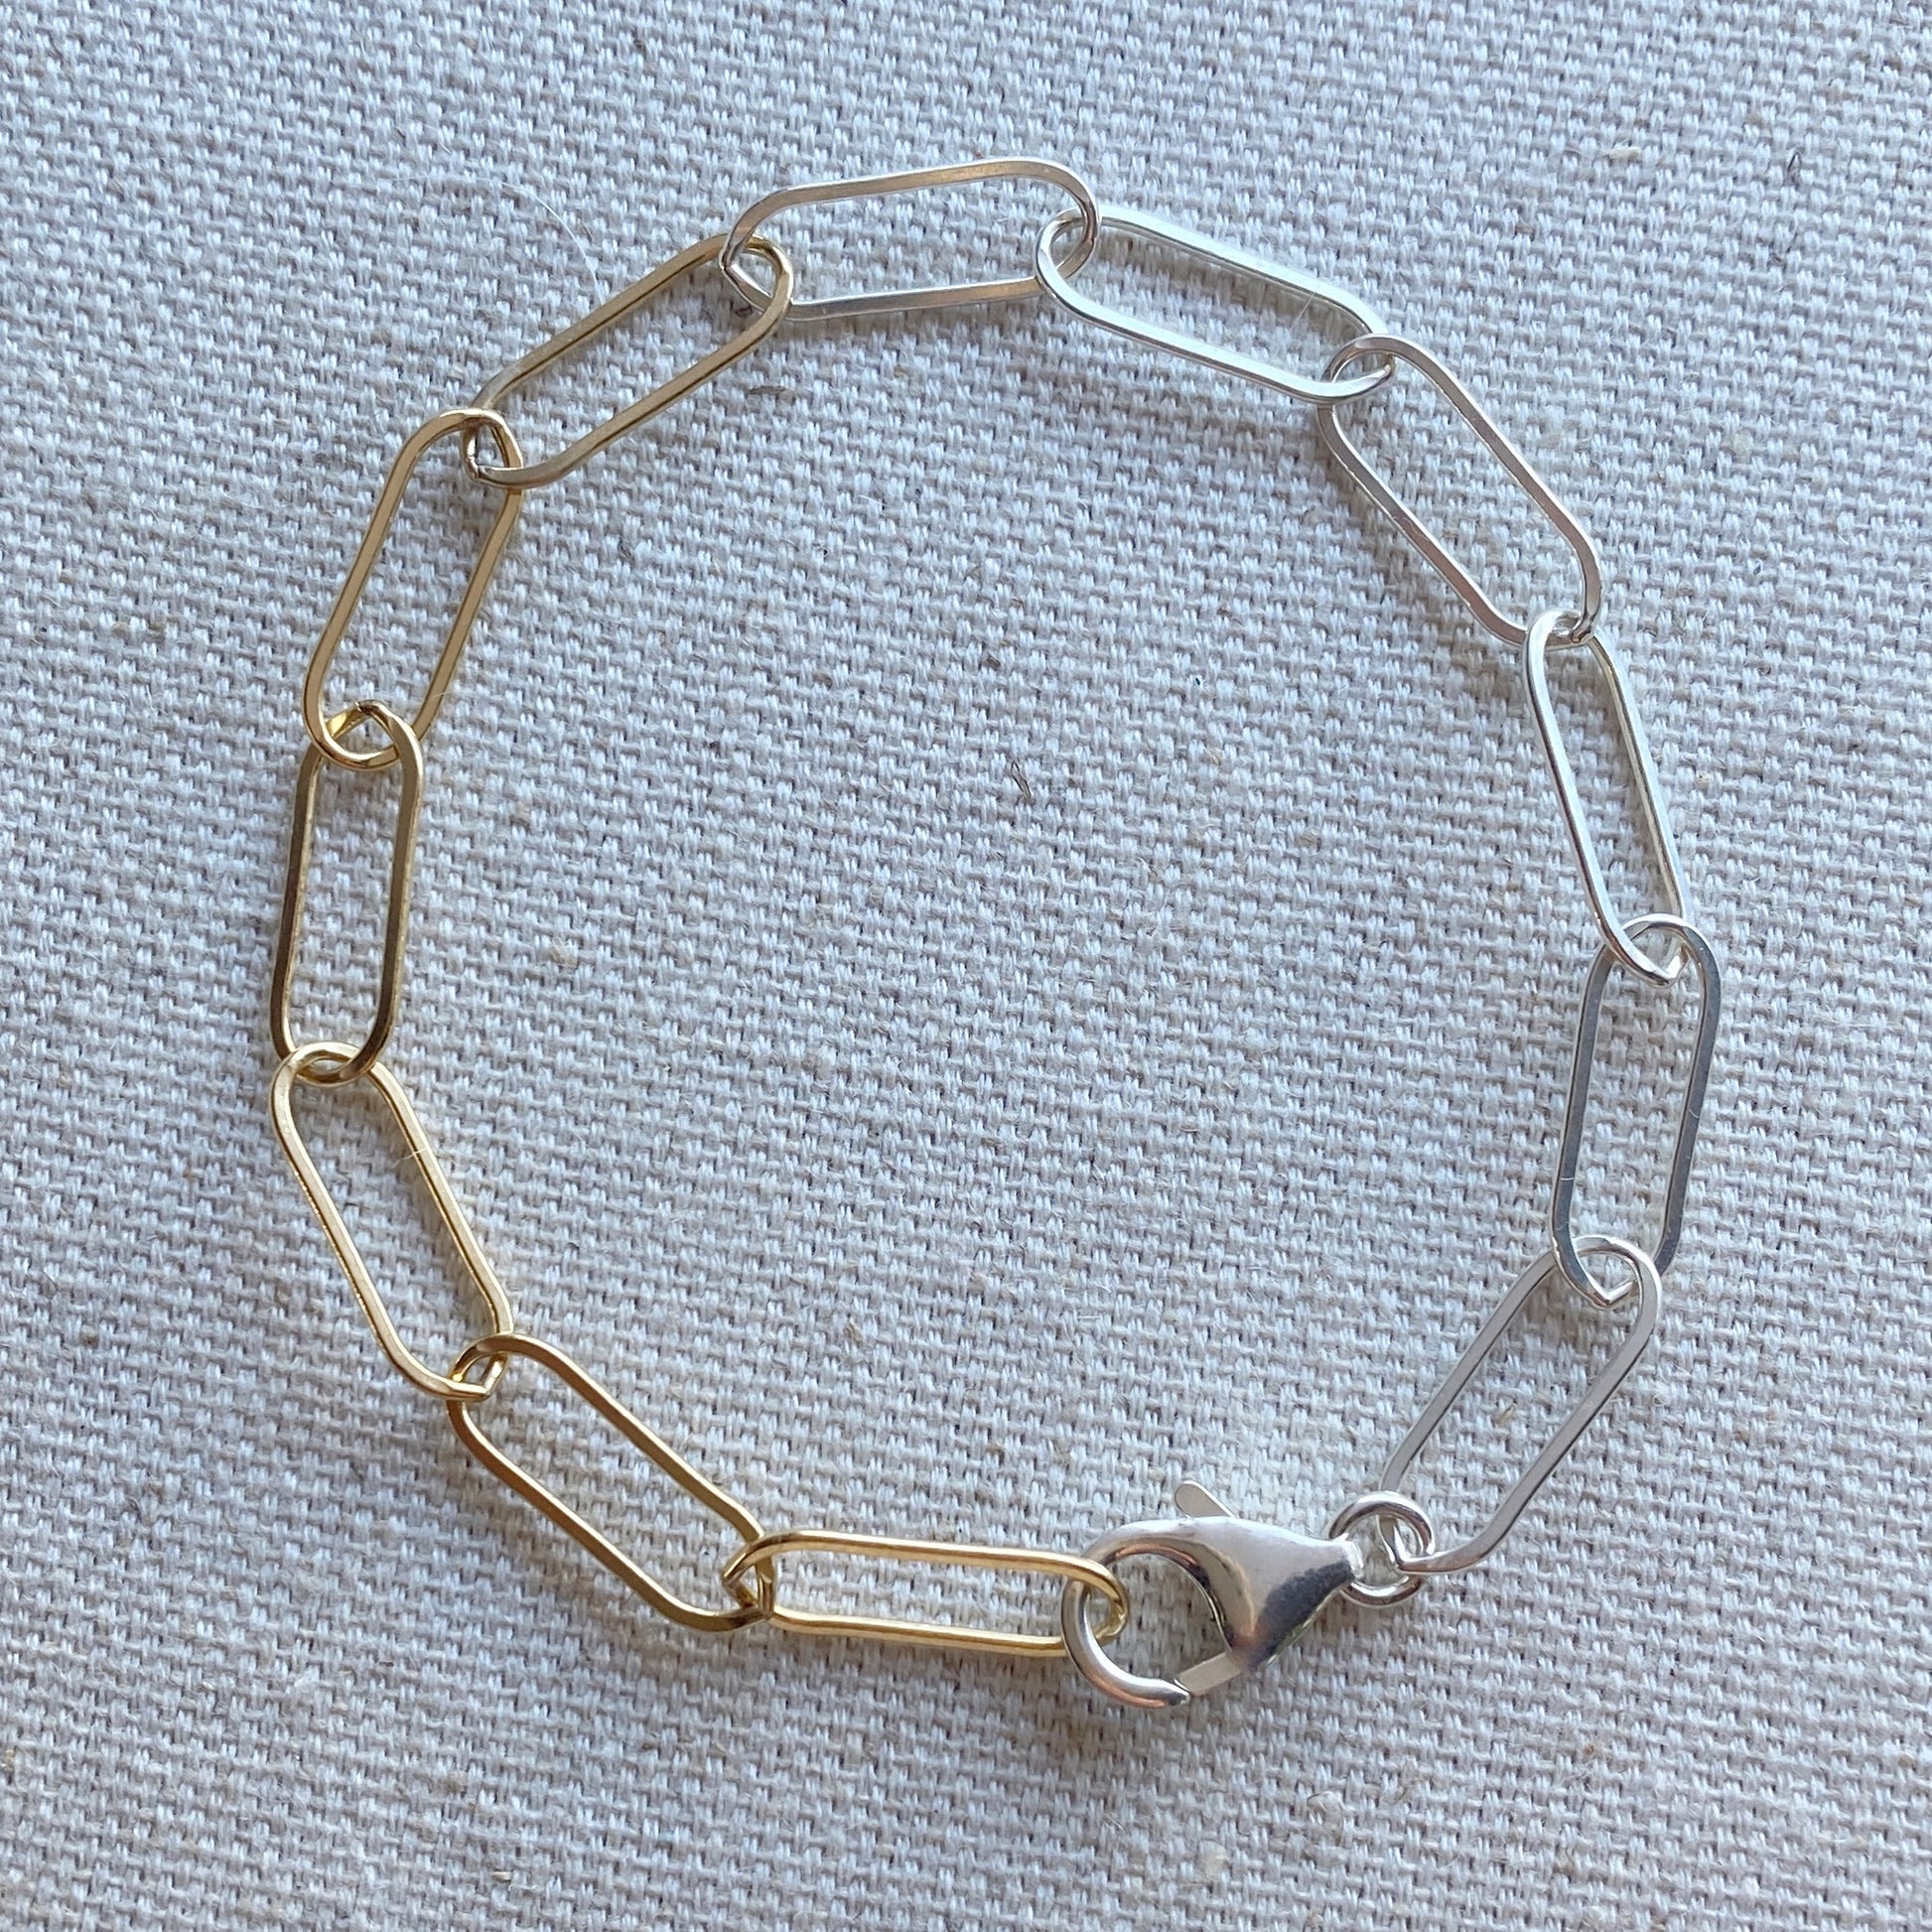 Precious Metal-plated Brass Chain Link Bracelet